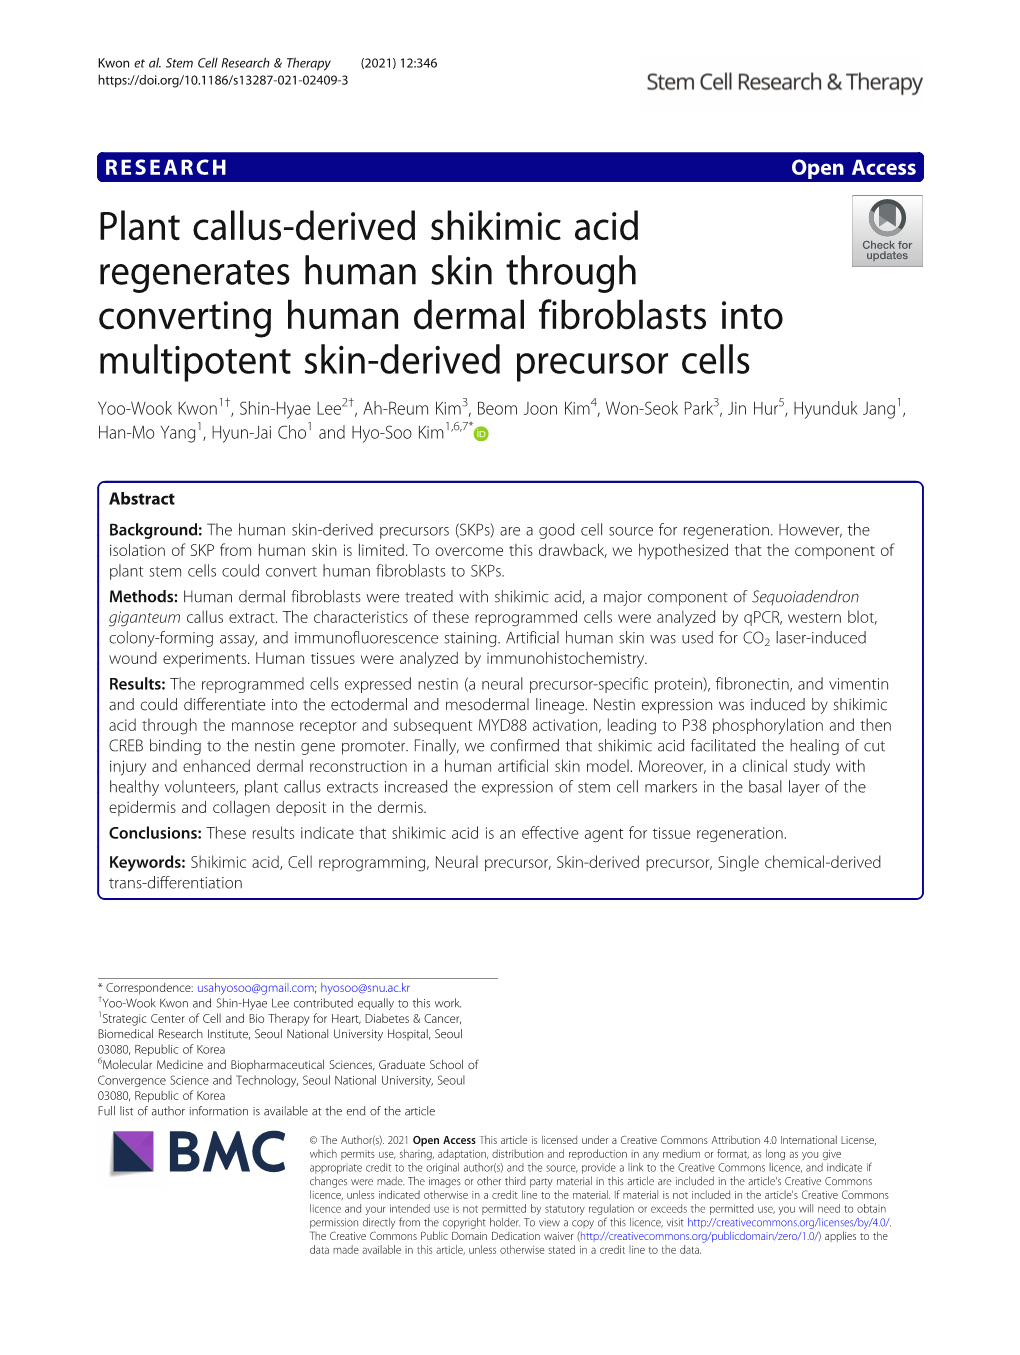 Plant Callus-Derived Shikimic Acid Regenerates Human Skin Through Converting Human Dermal Fibroblasts Into Multipotent Skin-Deri